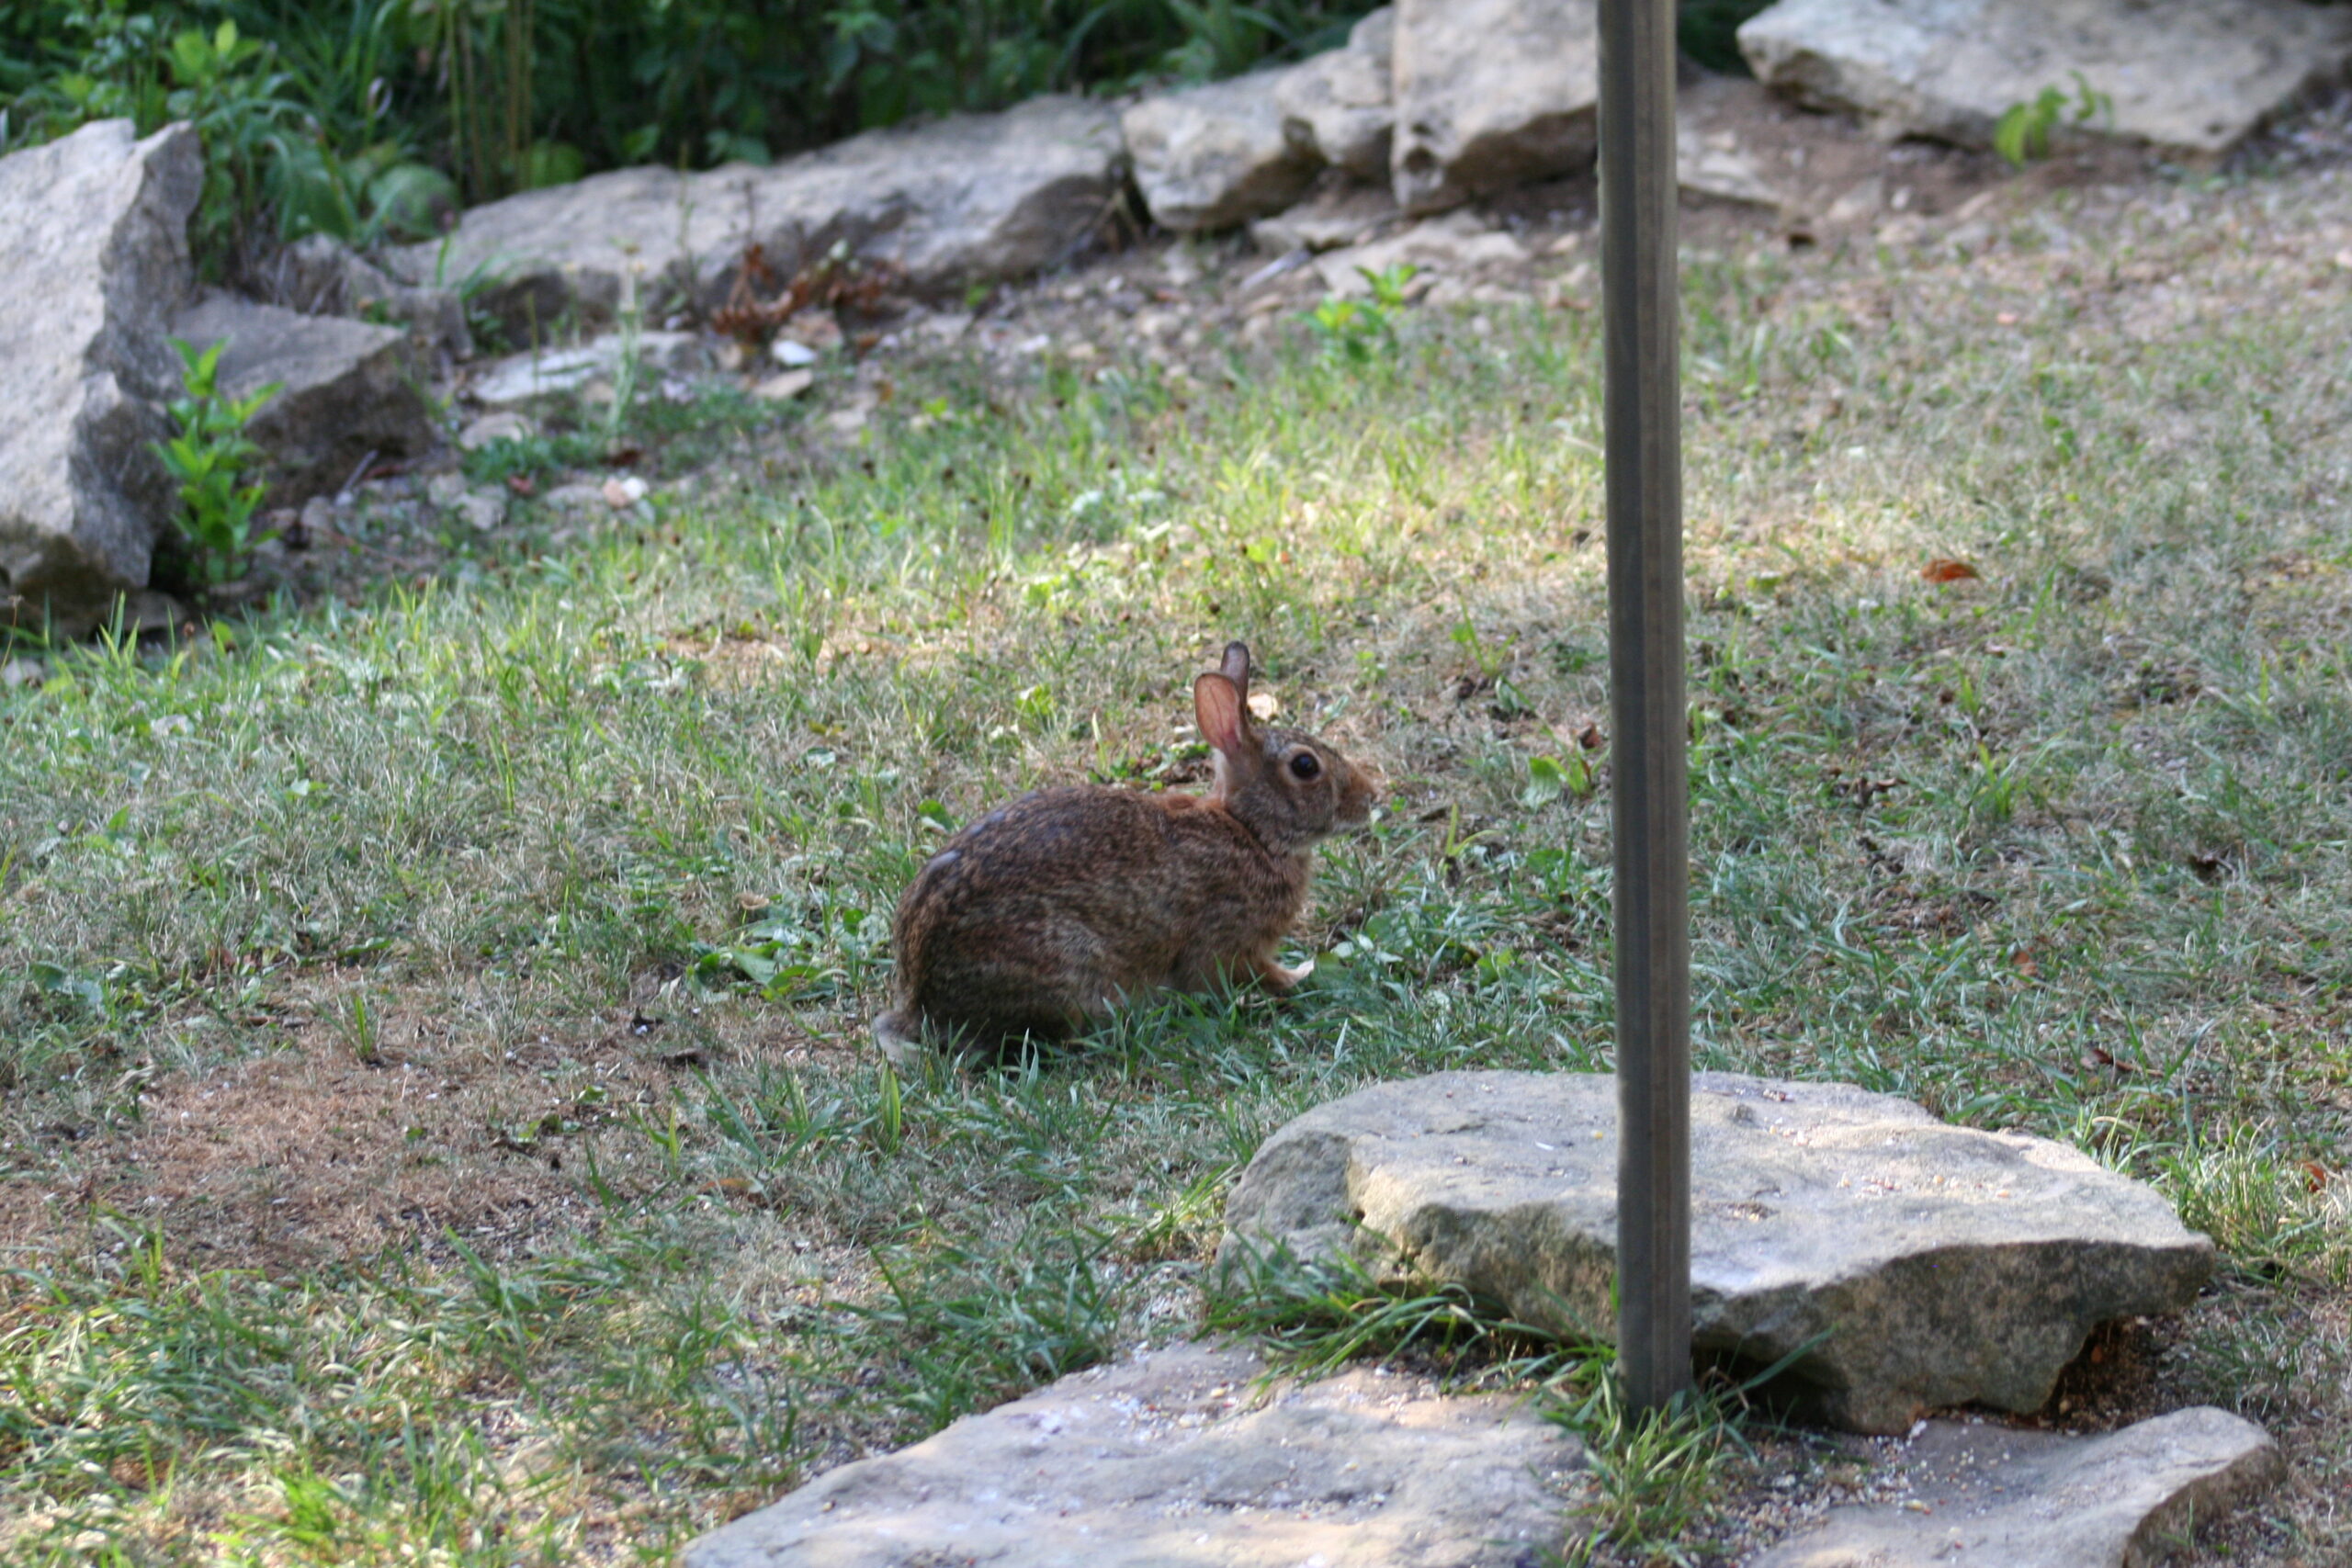 A rabbit under a bird feeder.